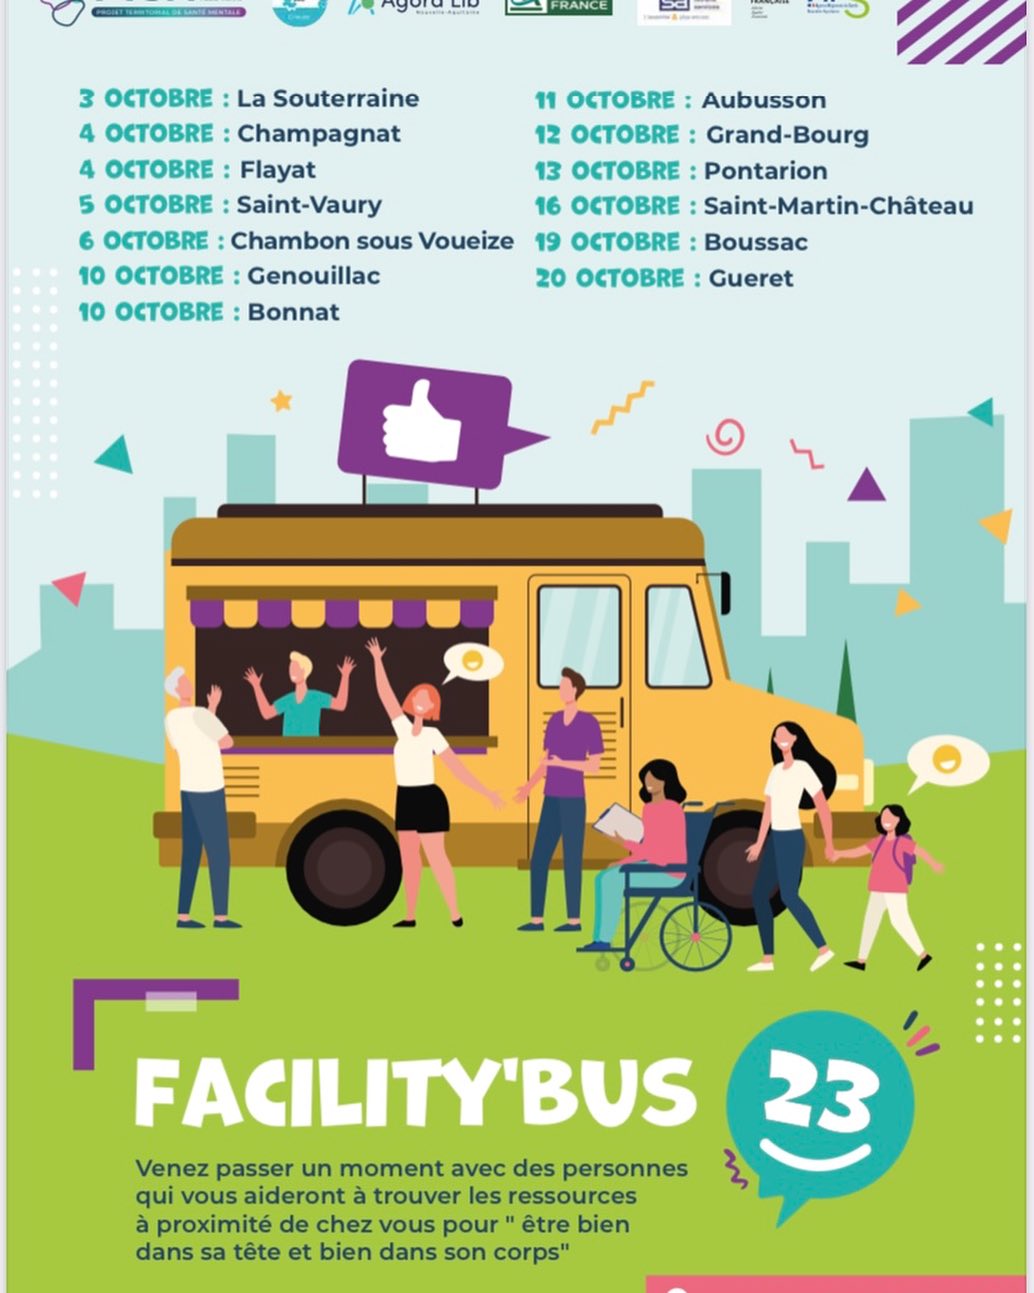 Facility'bus